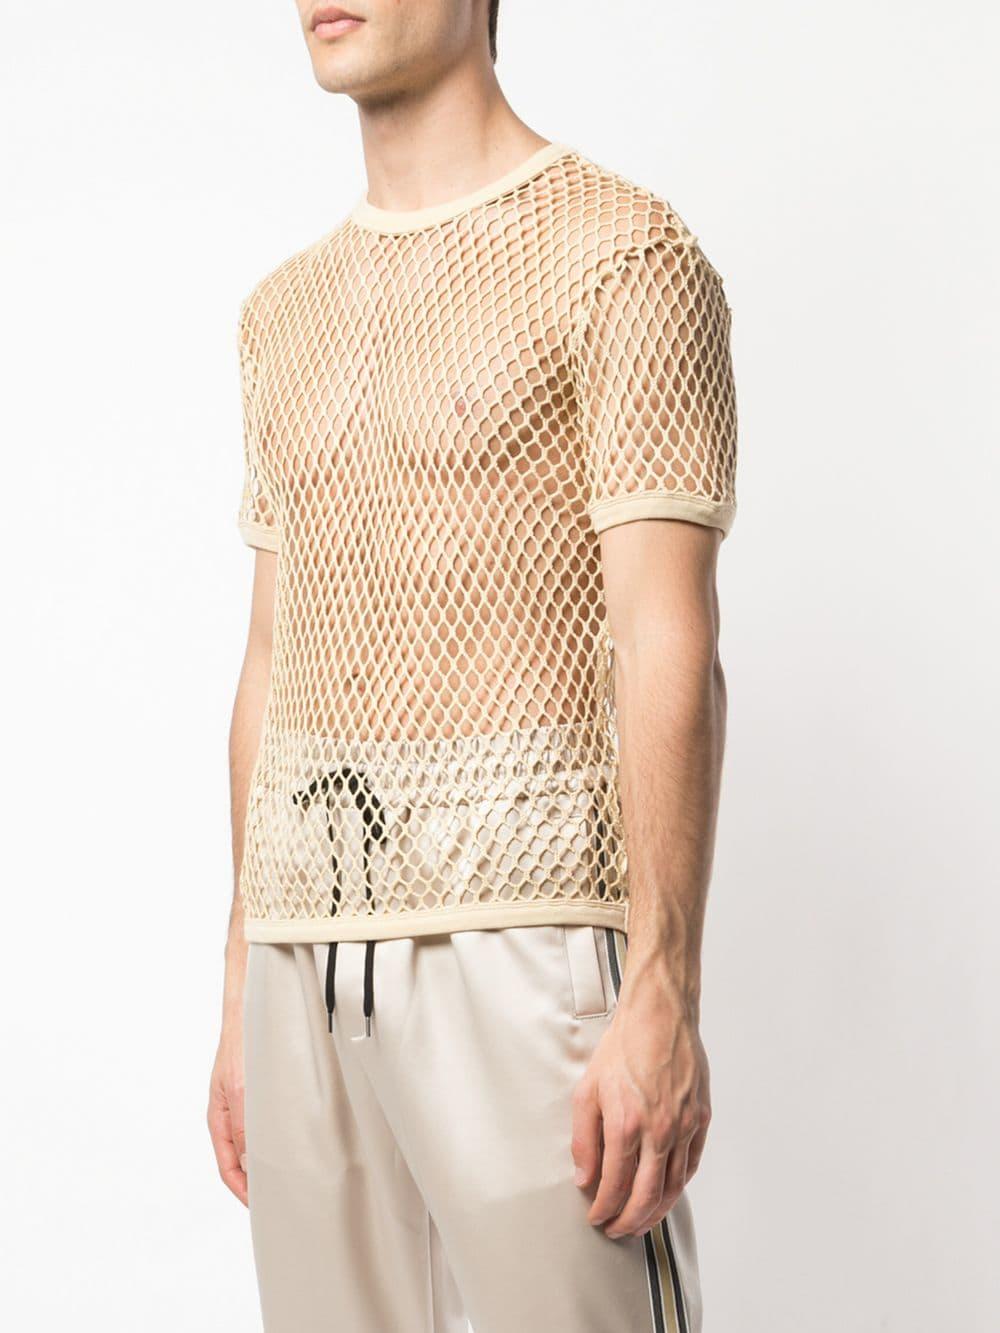 Cmmn Swdn Cotton Beige Fishnet T-shirt in Natural for Men - Lyst